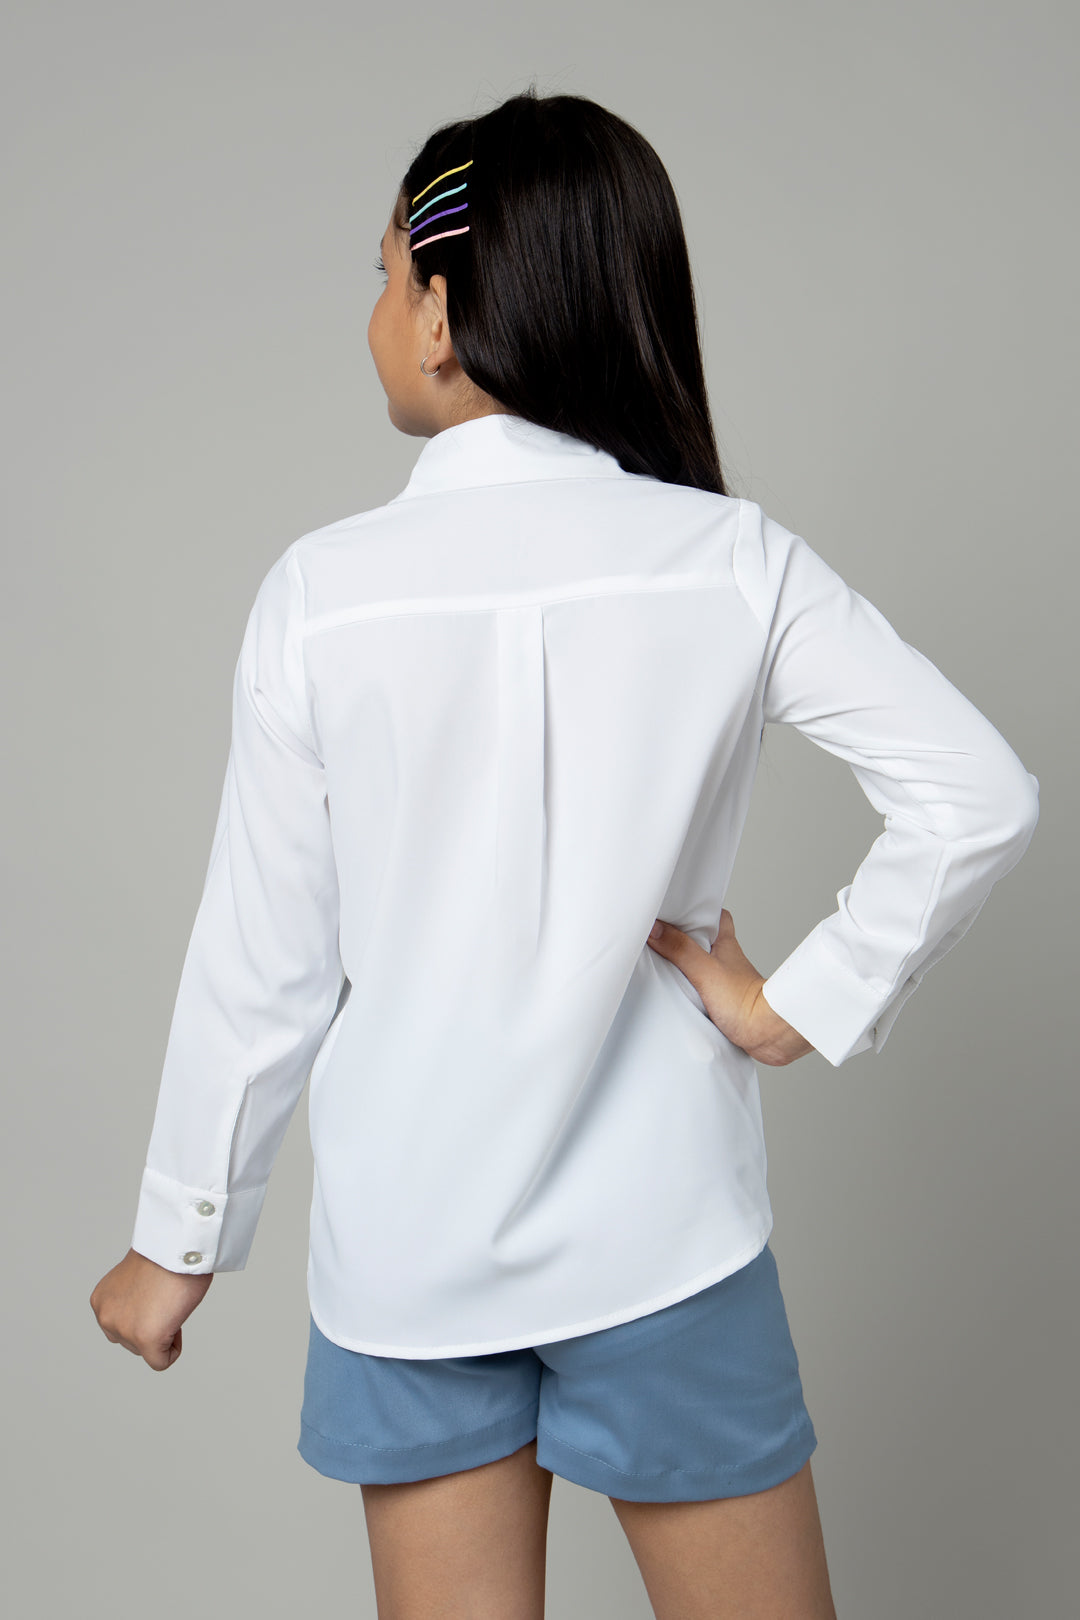 Plain White Spread Collar Casual Shirt For Girls